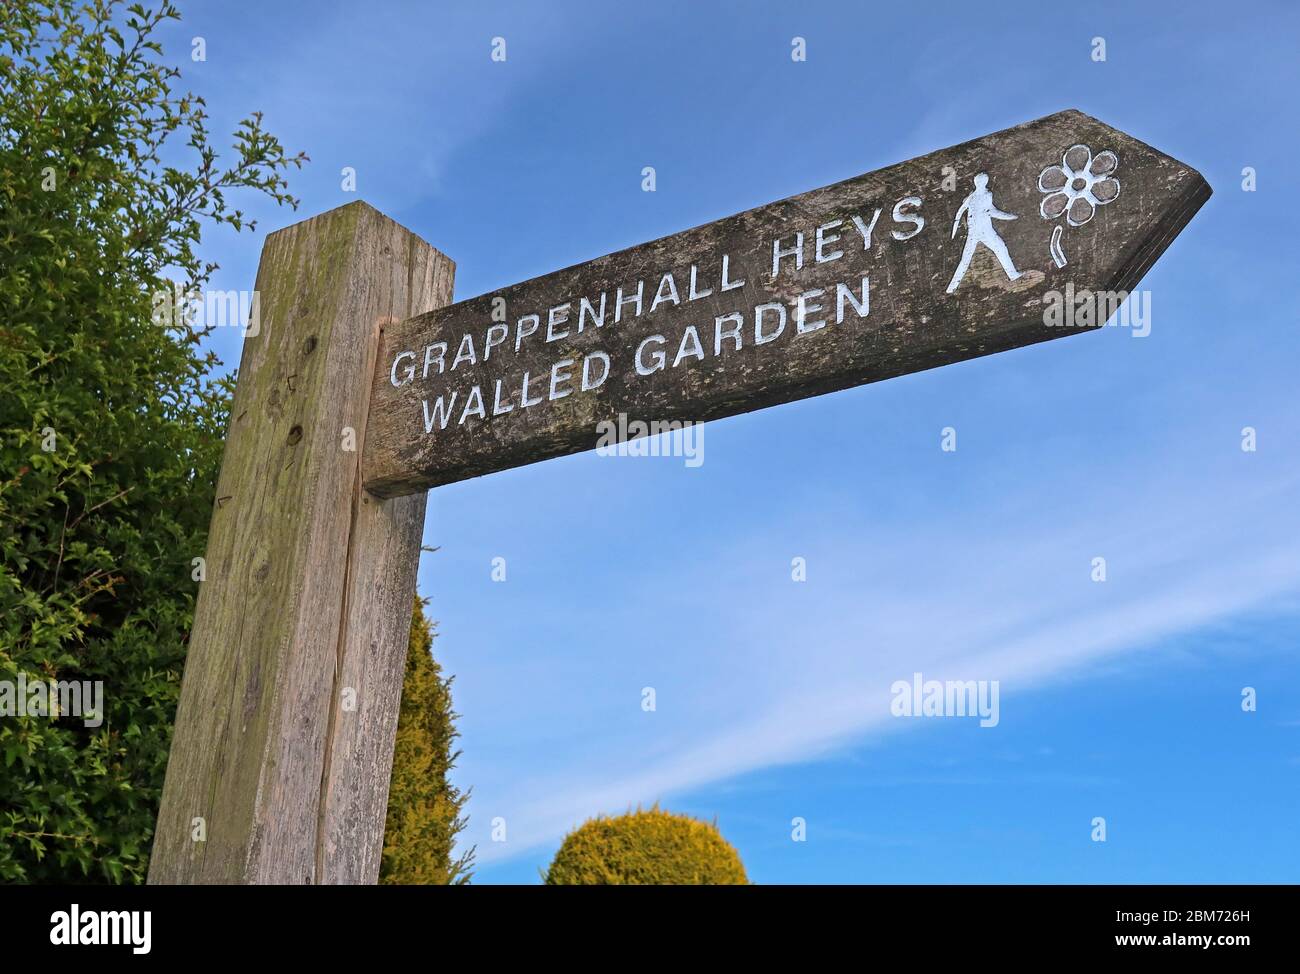 Grappenhall Heys walled garden sign, Grappenhall Village, South Warrington, Cheshire, England, UK, wooden sign, WA4 Stock Photo